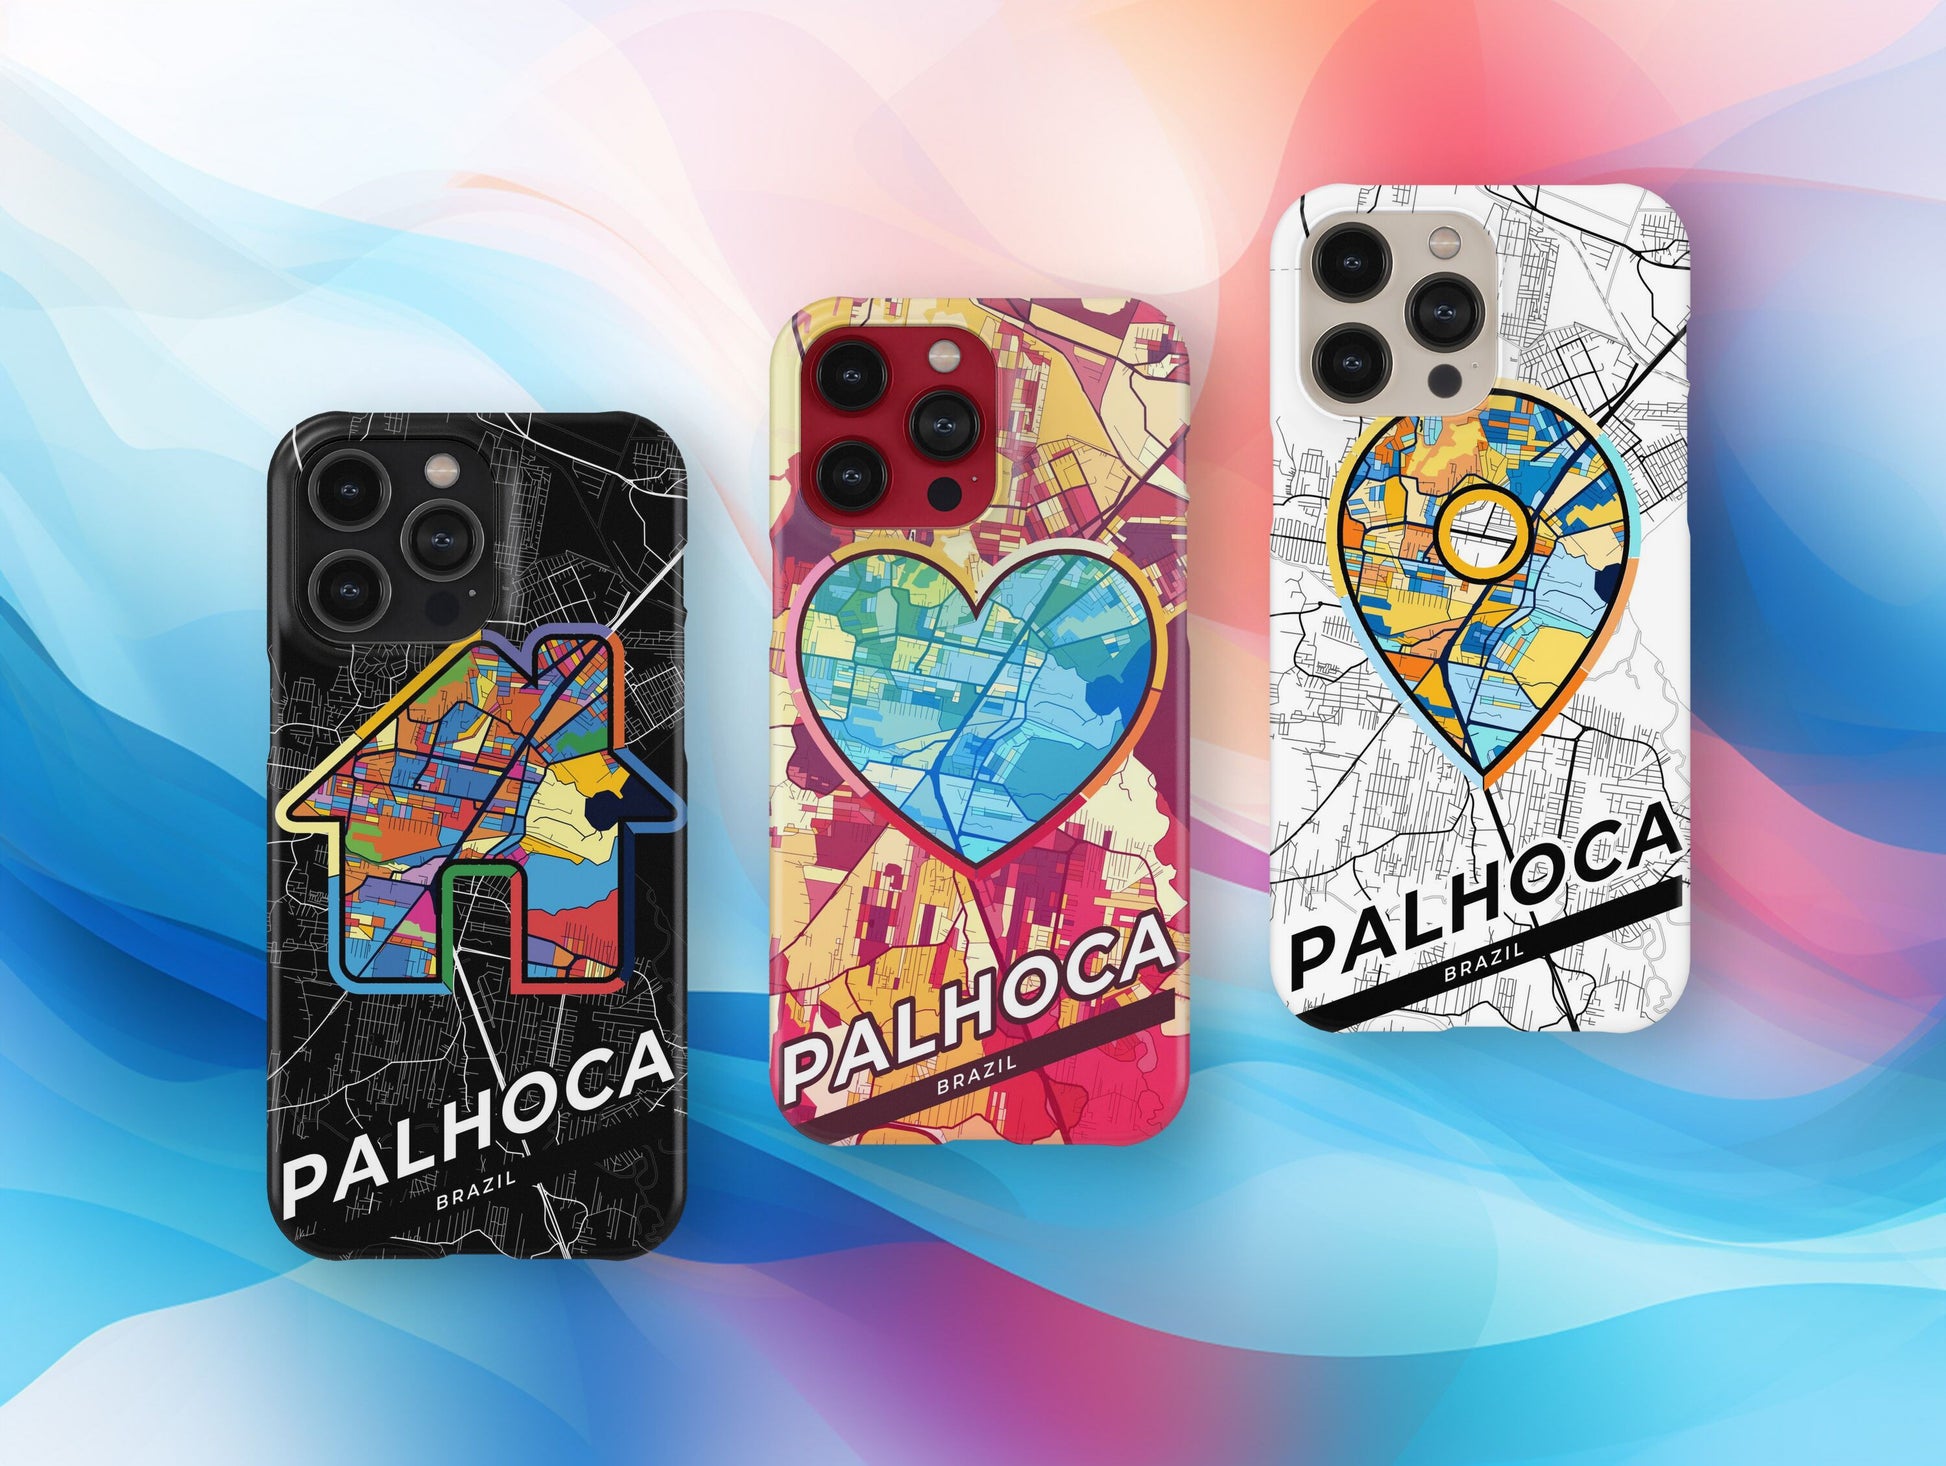 Palhoca Brazil slim phone case with colorful icon